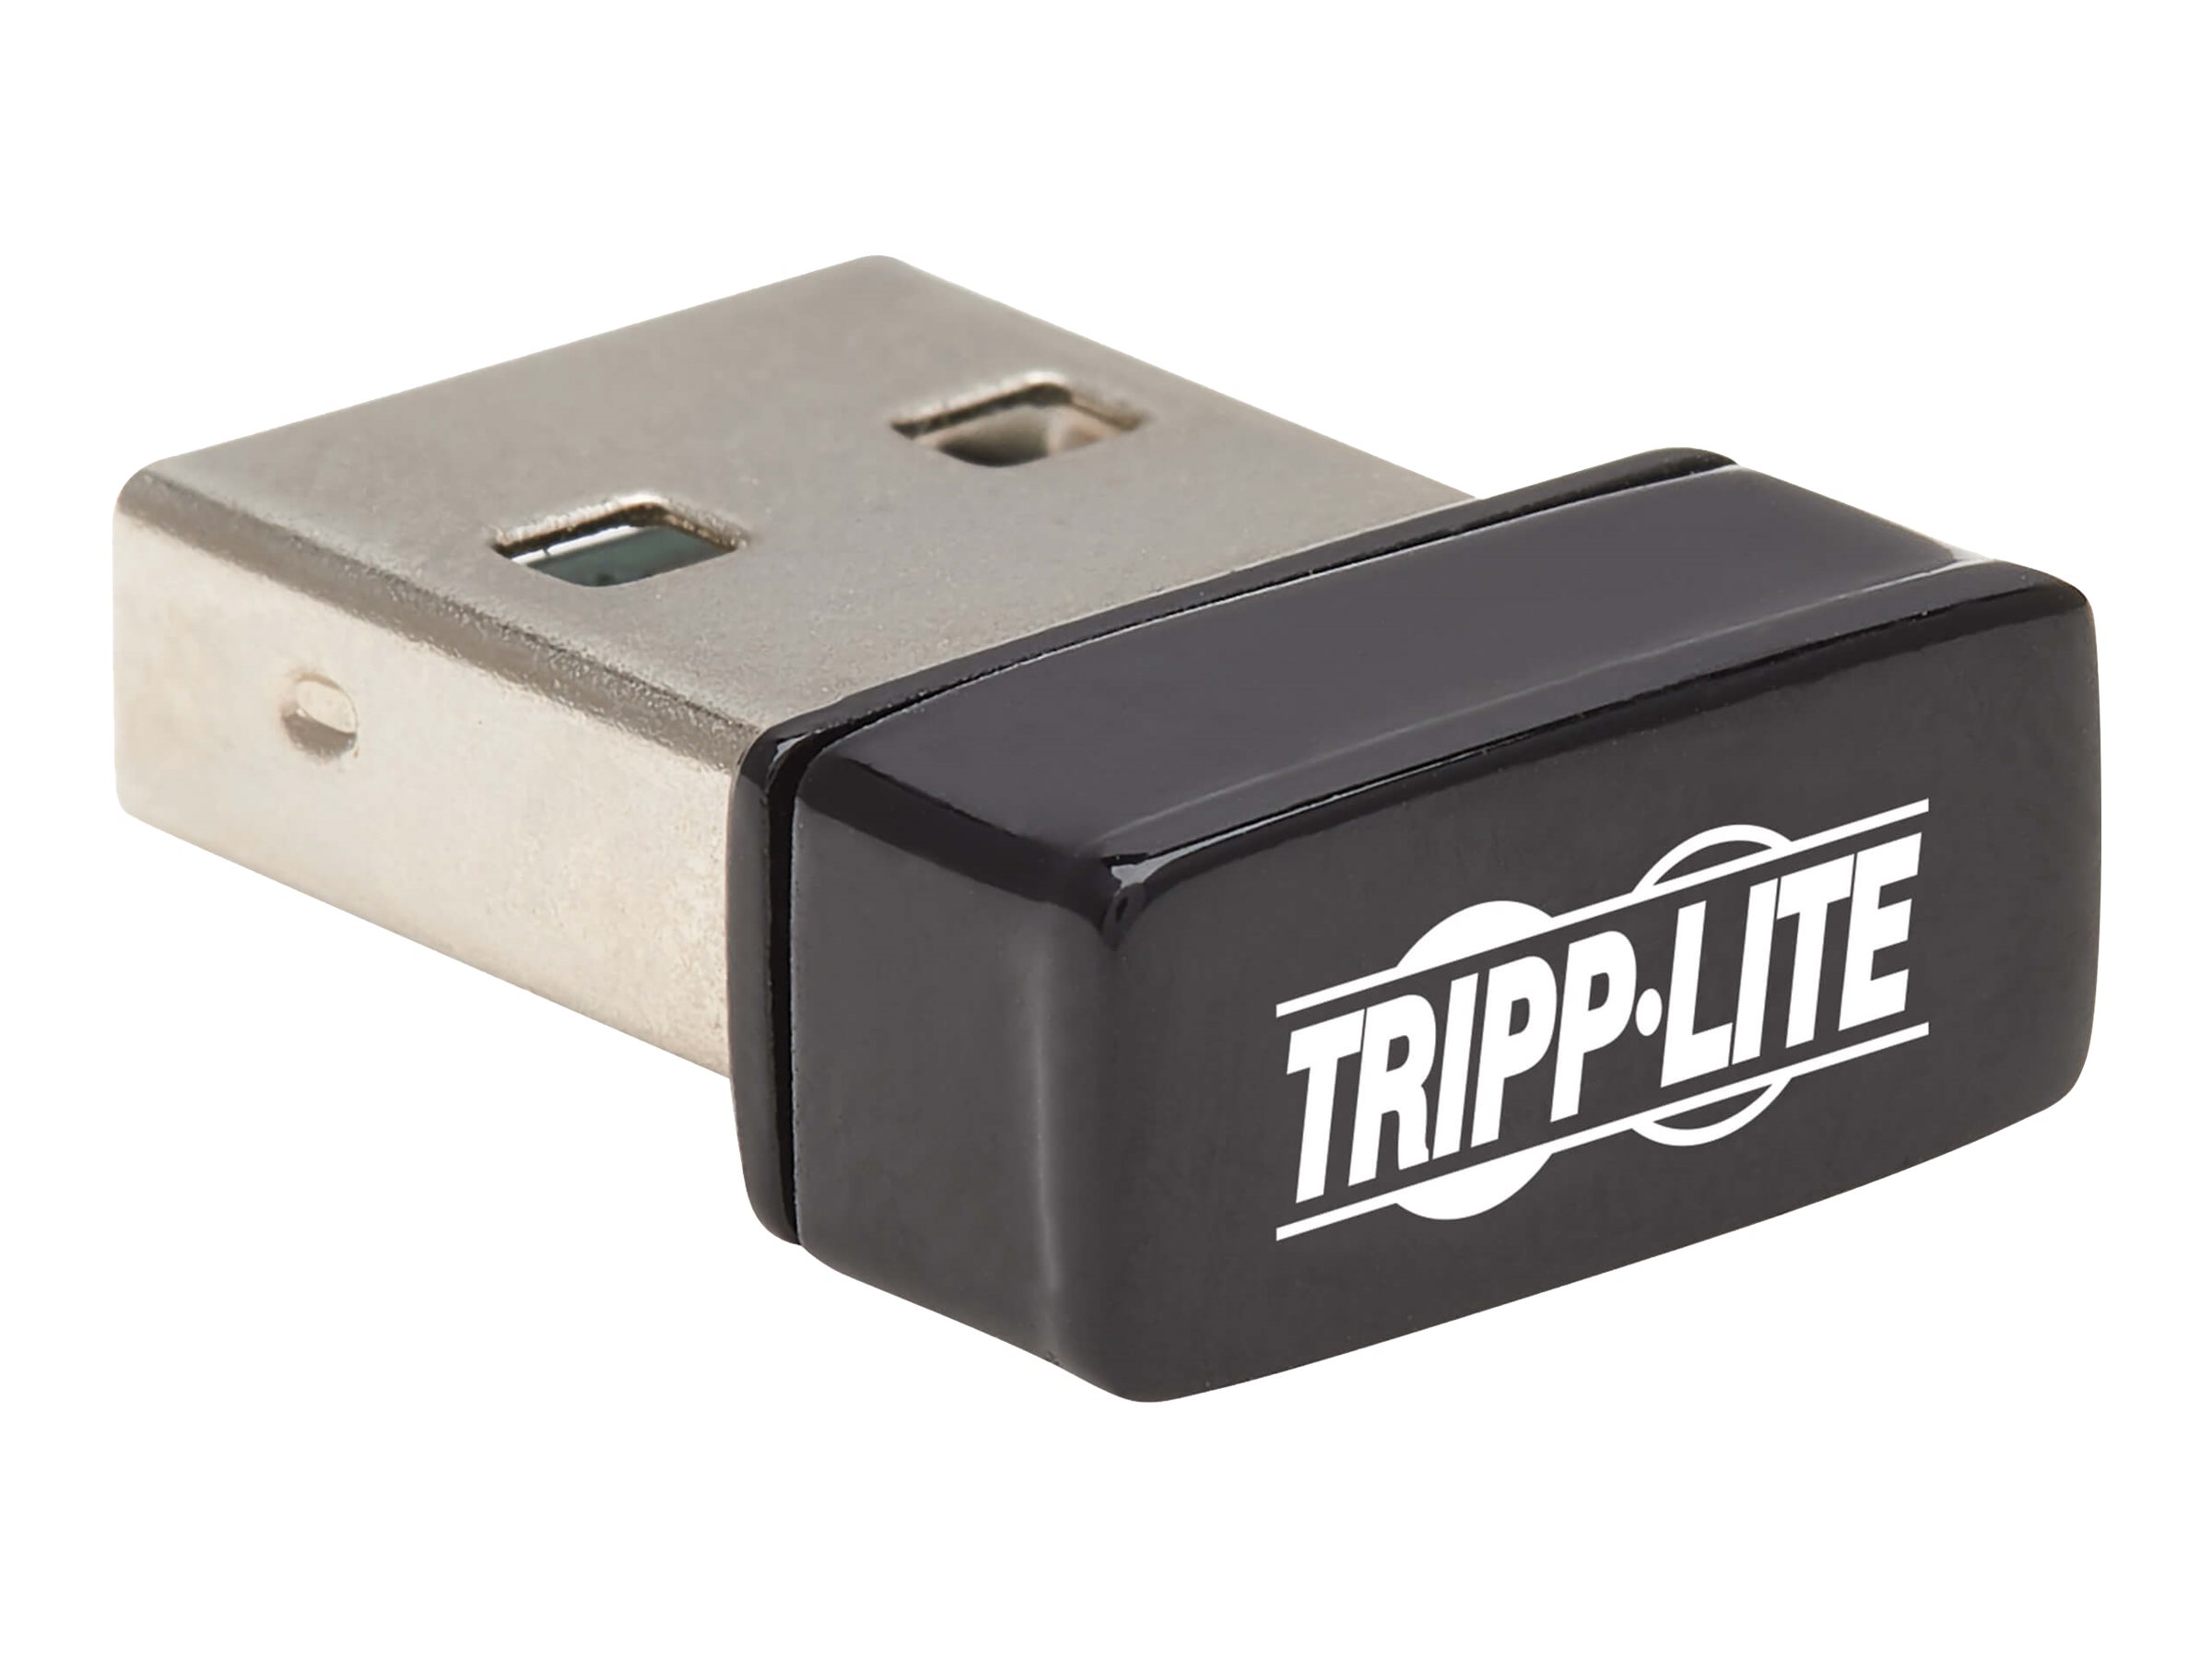 Tripp Lite USB 2.0 Wi-Fi Adapter, AC600 2.4Ghz/5Ghz Dual Band, 1T1R, 802.11ac